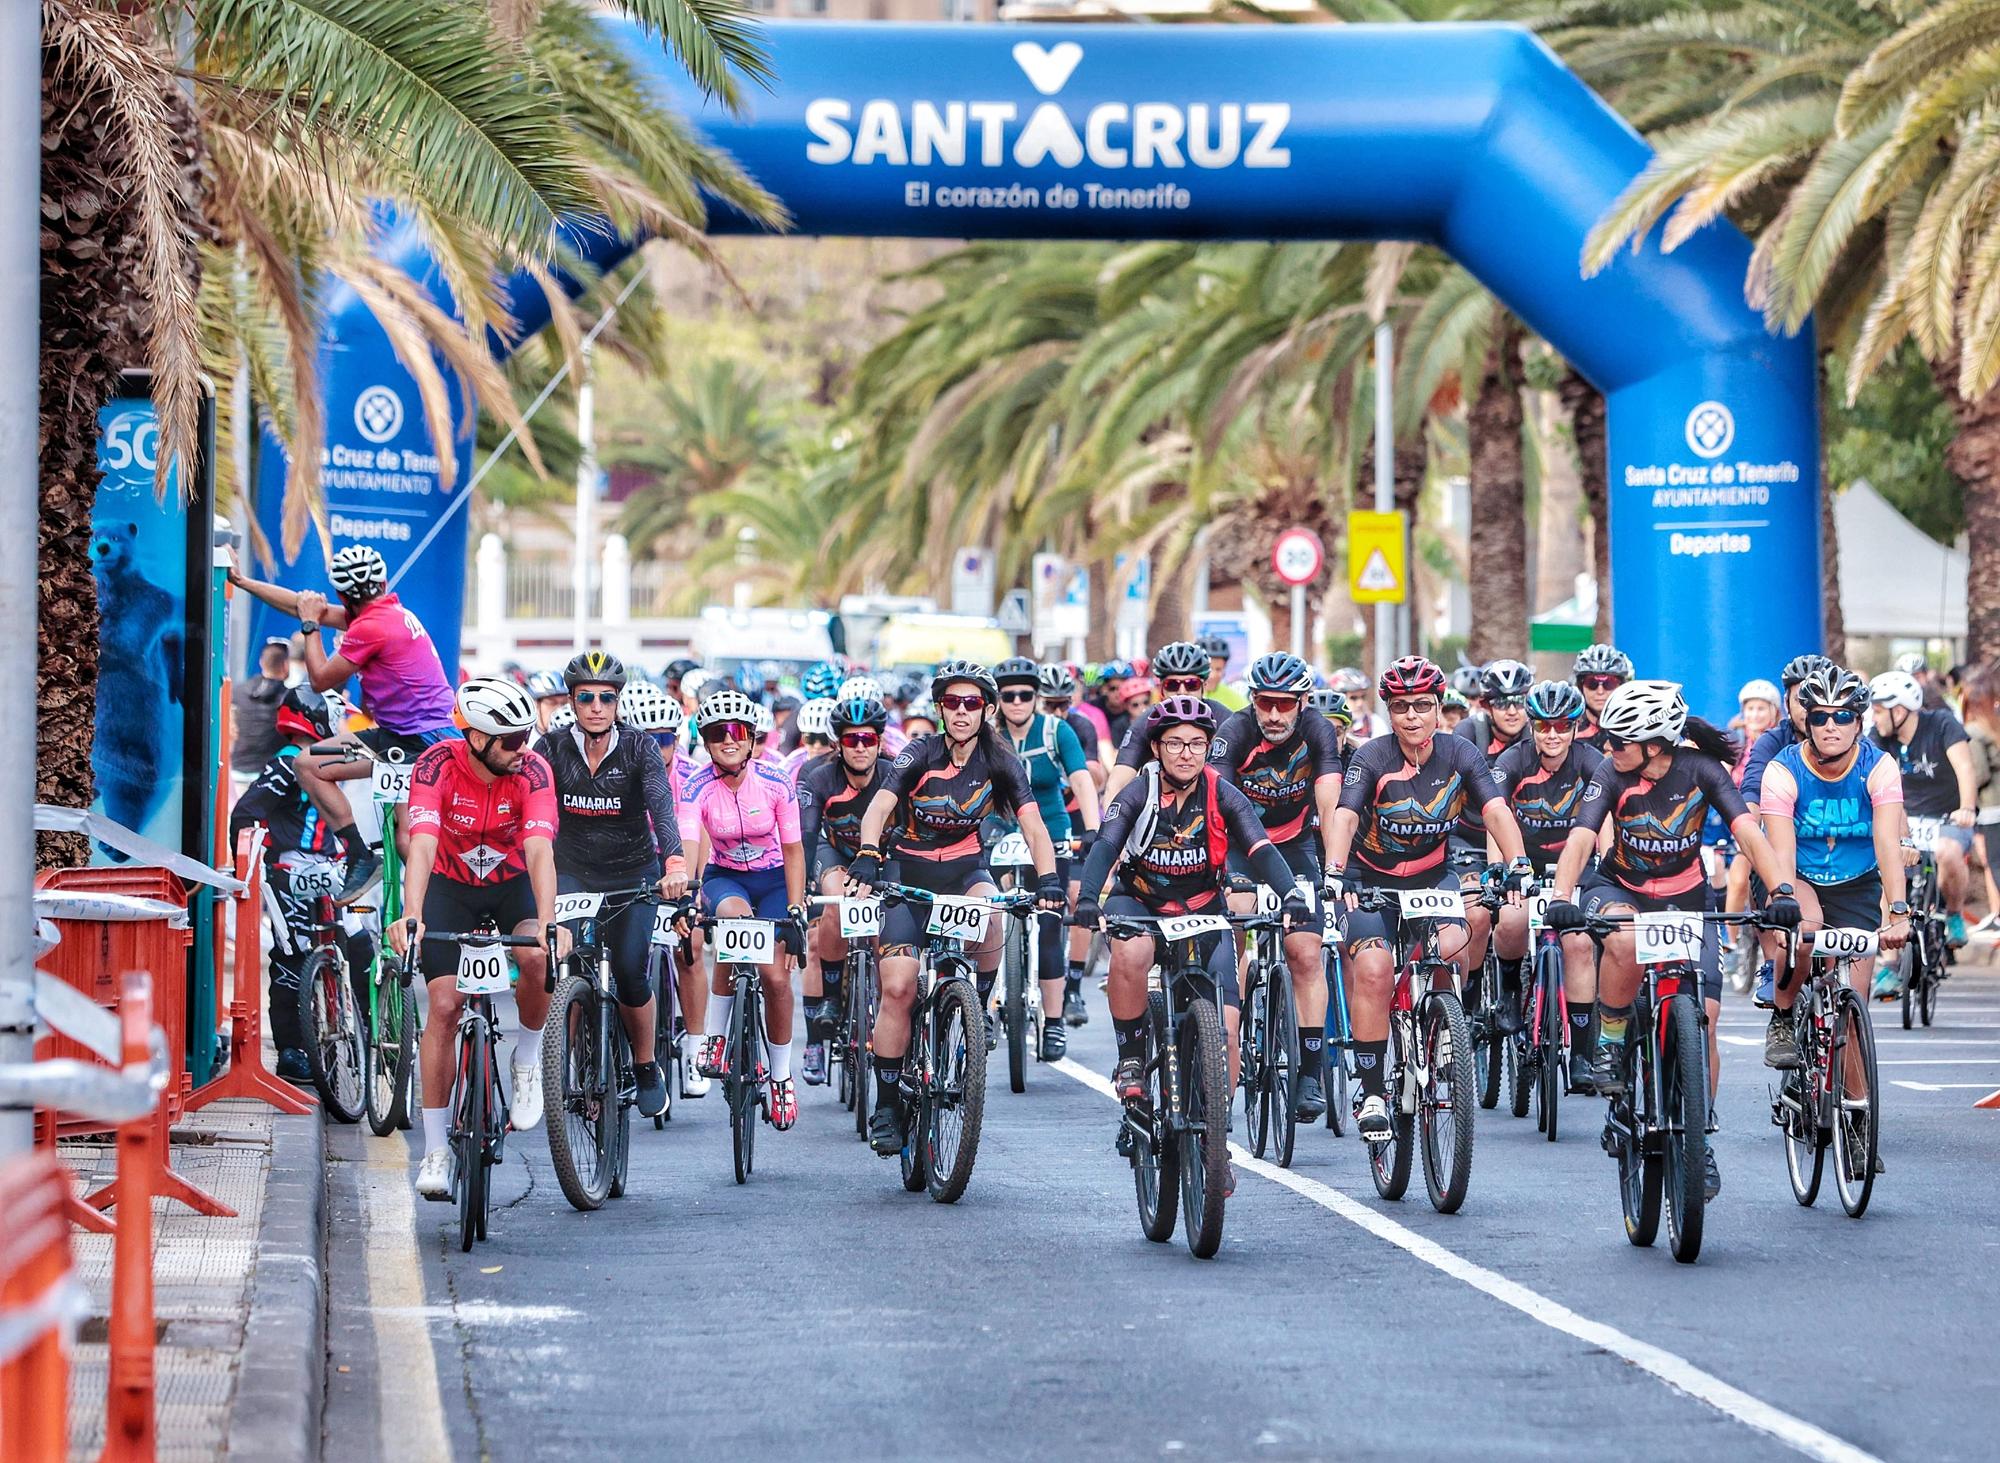 Fiesta de la bicicleta en Santa Cruz de Tenerife